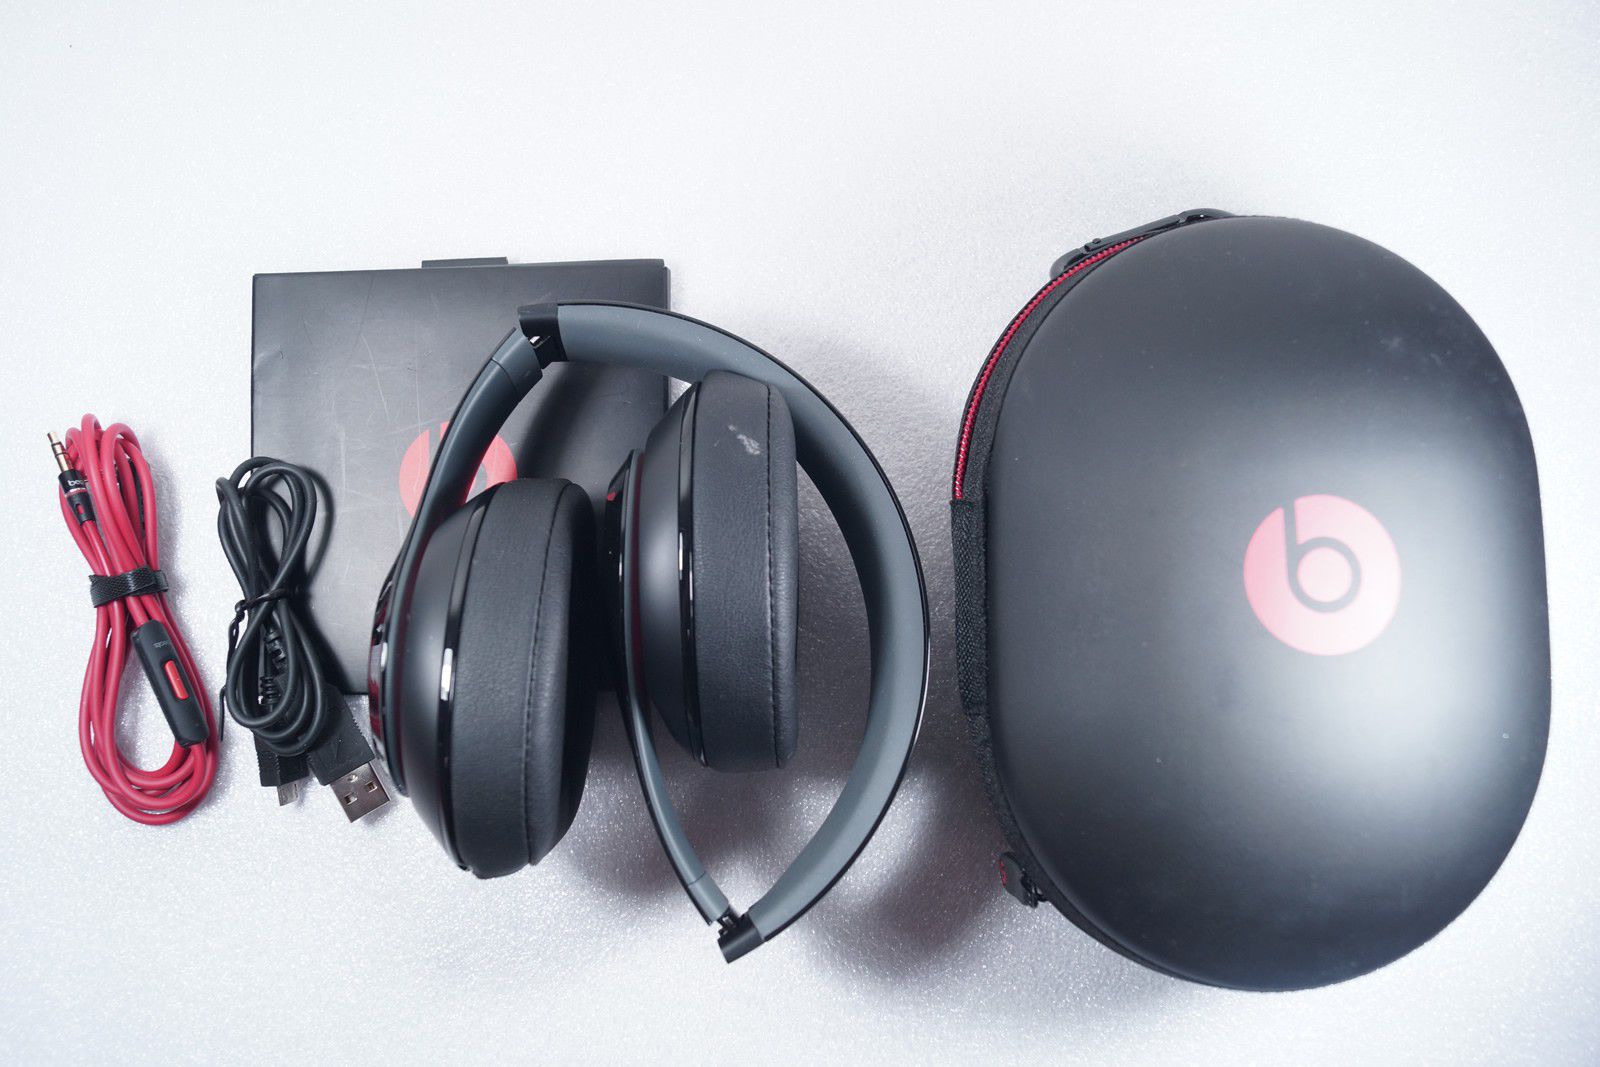 Genuine Beats Studio Wired 2.0 Over-Ear Headphone - Black